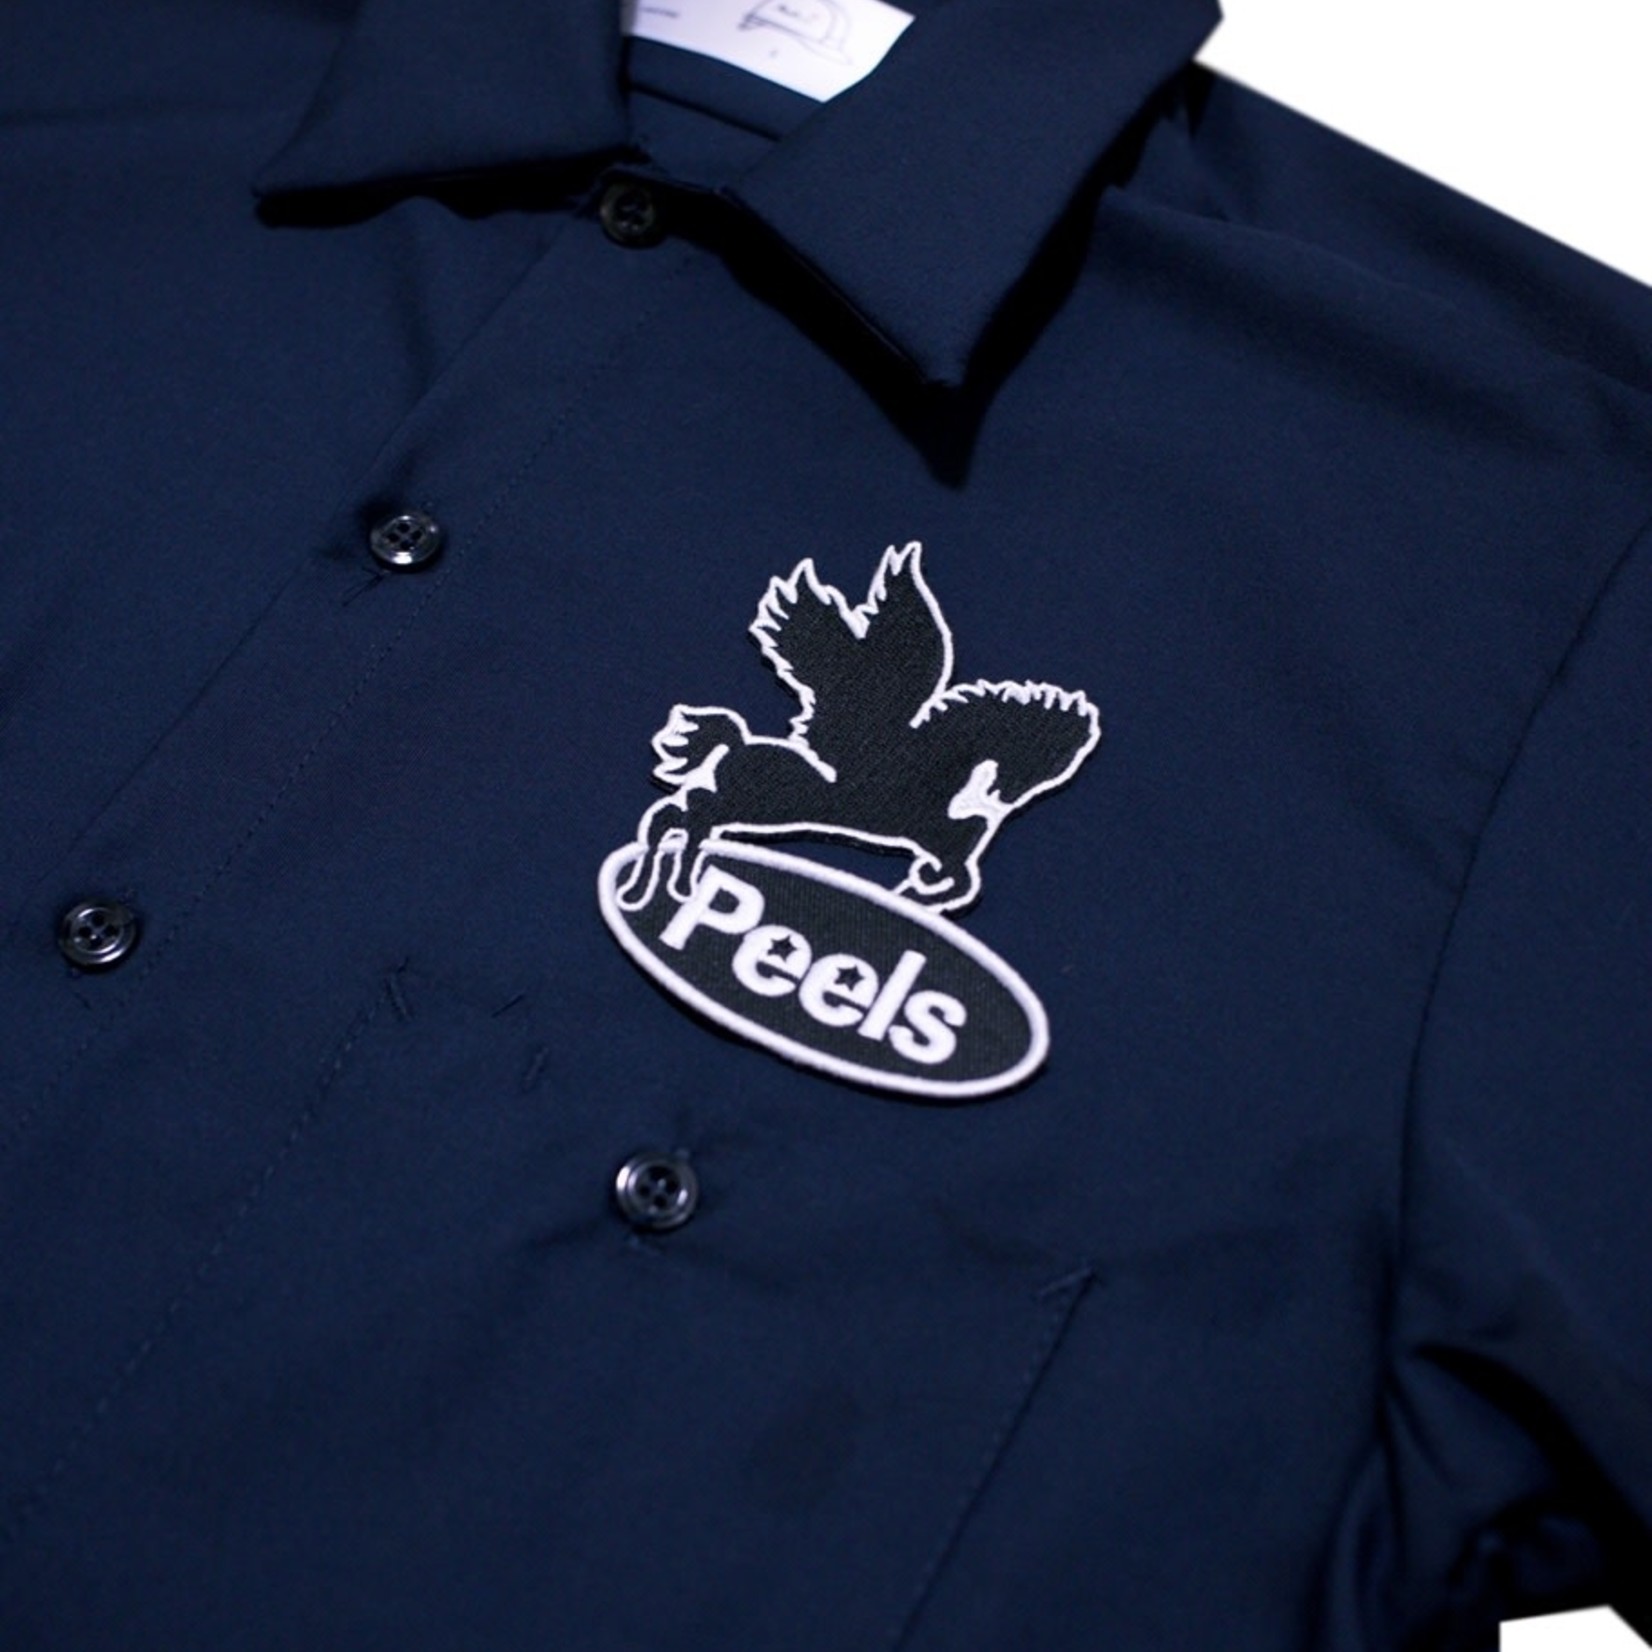 Peels NYC Peels NYC Gas Co. Shirt